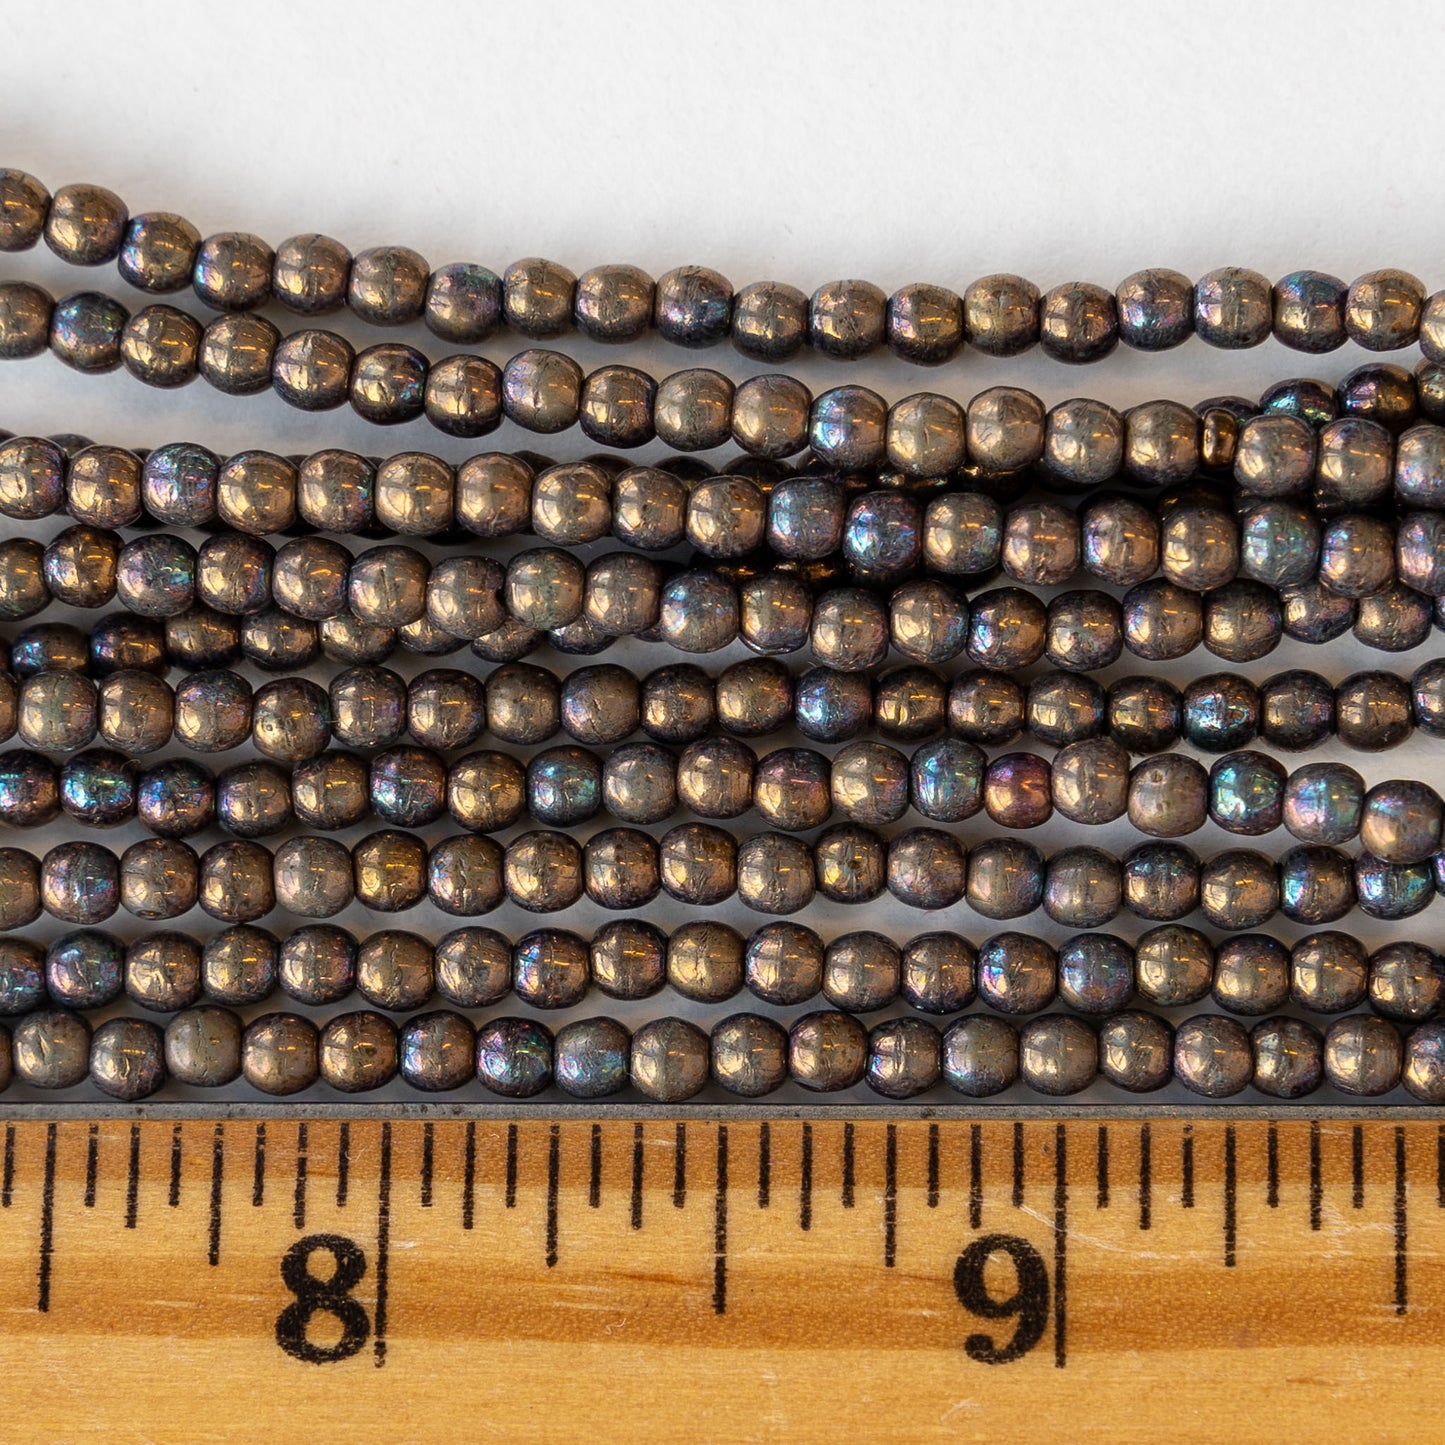 3mm Round Glass Beads - Oxidized Bronze Clay - 100 Beads